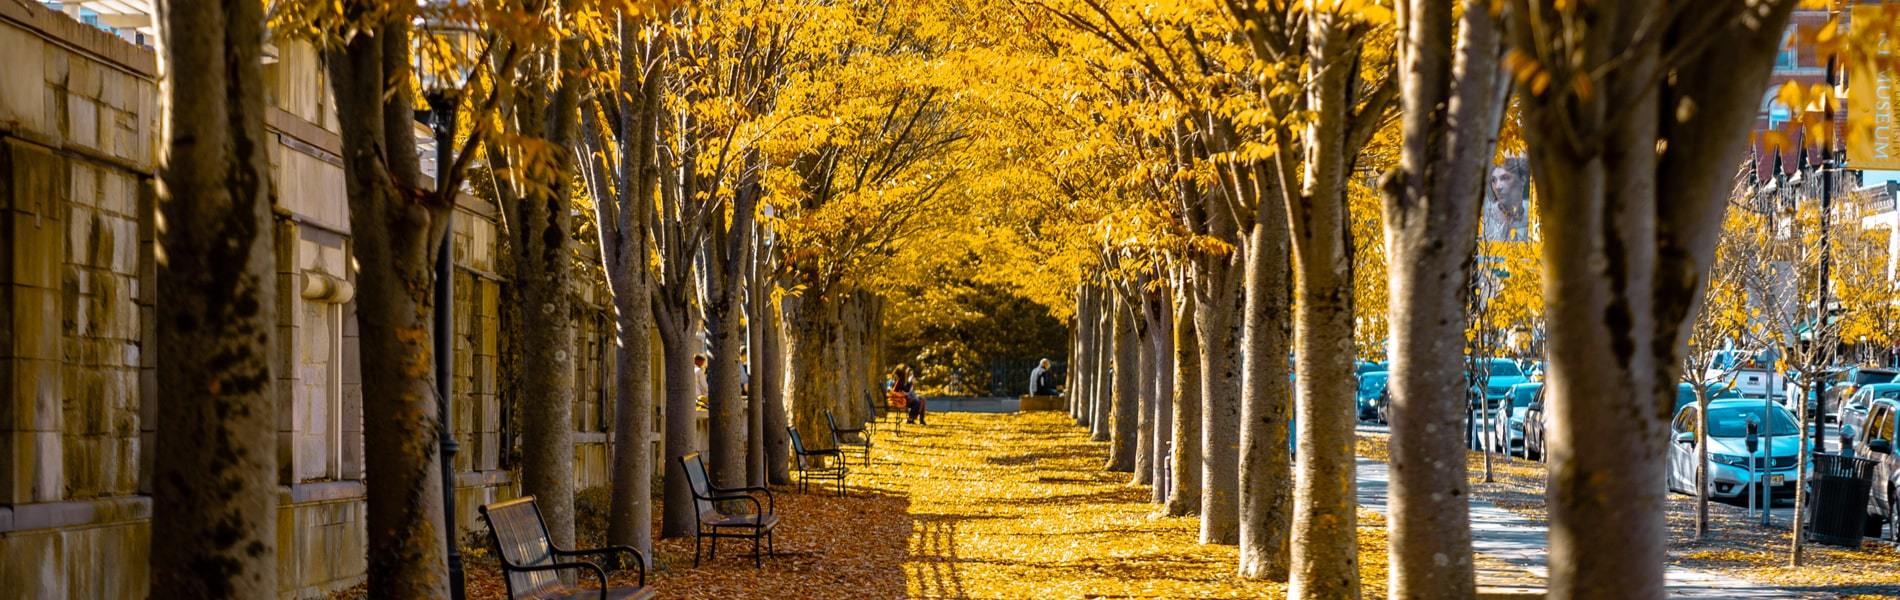 Yellow trees lining Princeton, NJ street in autumn